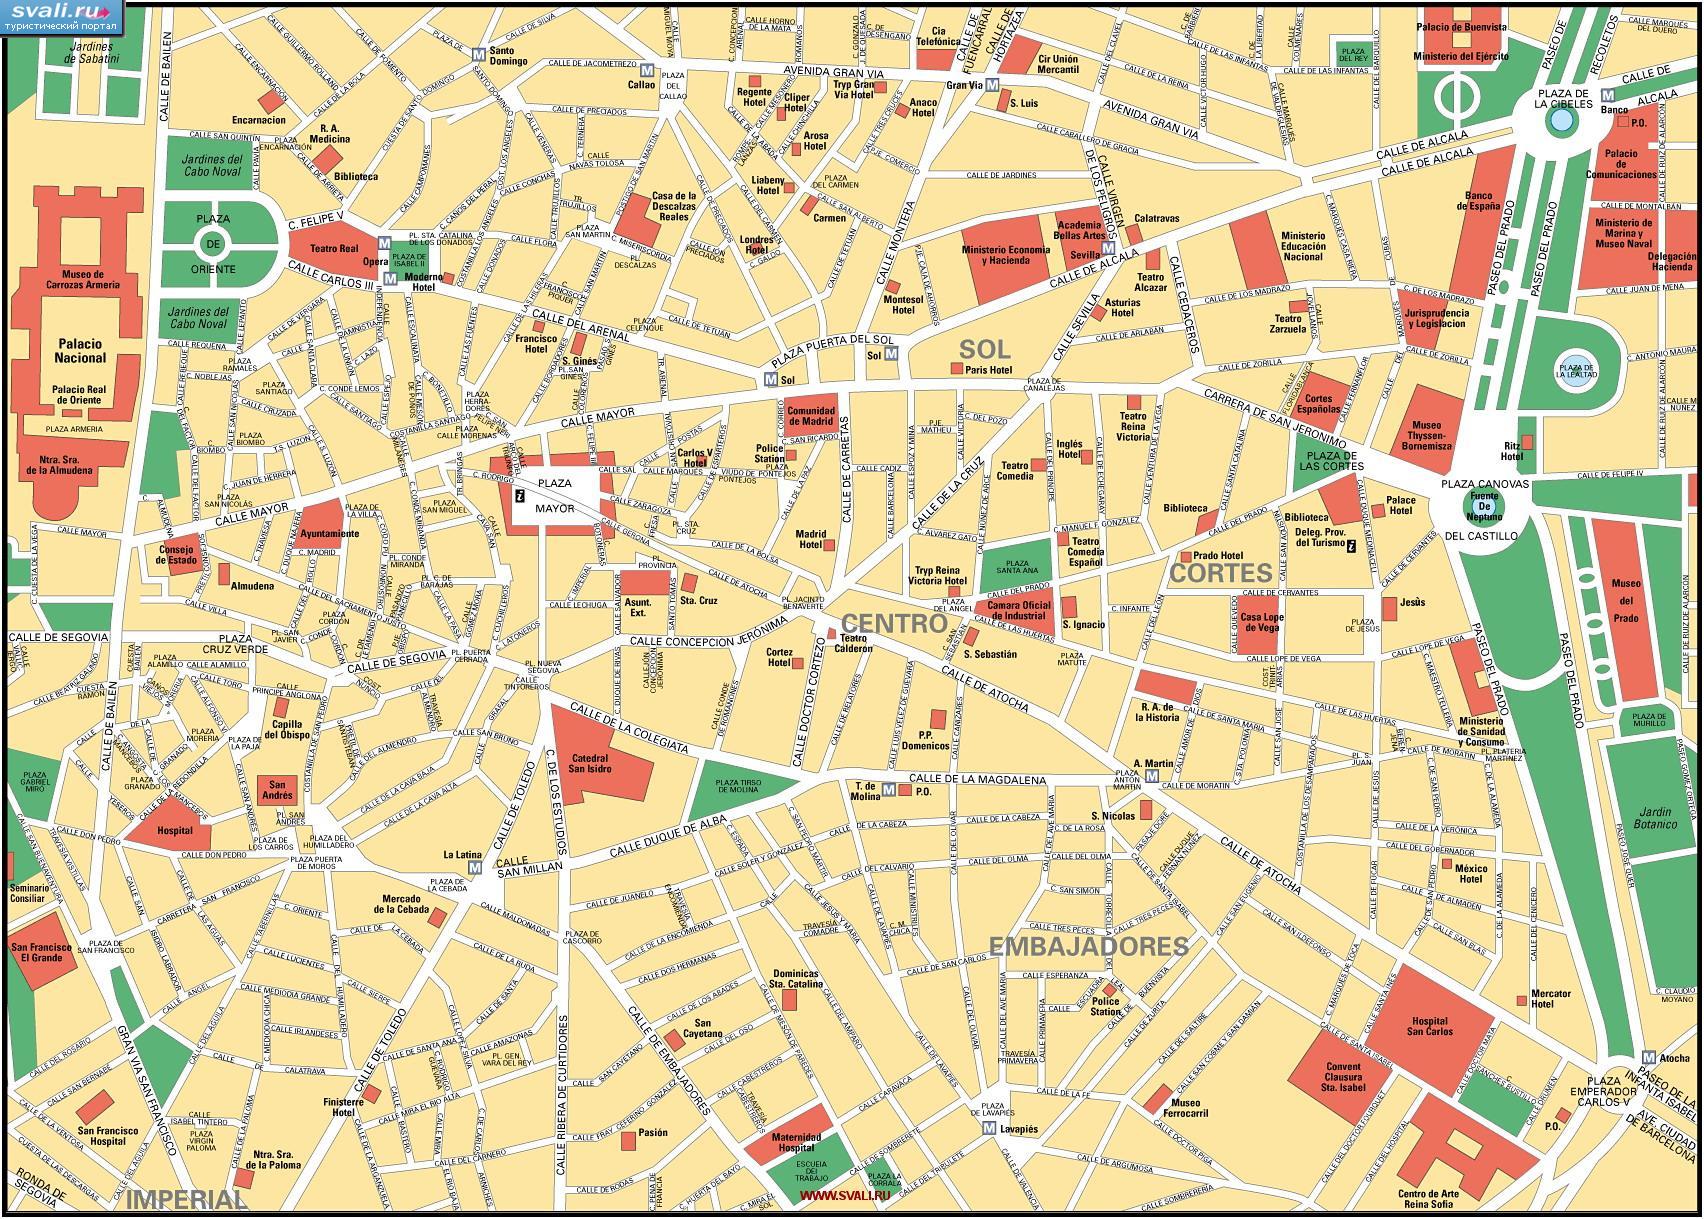 Туристическая карта центра Мадрида, Испания (исп.)